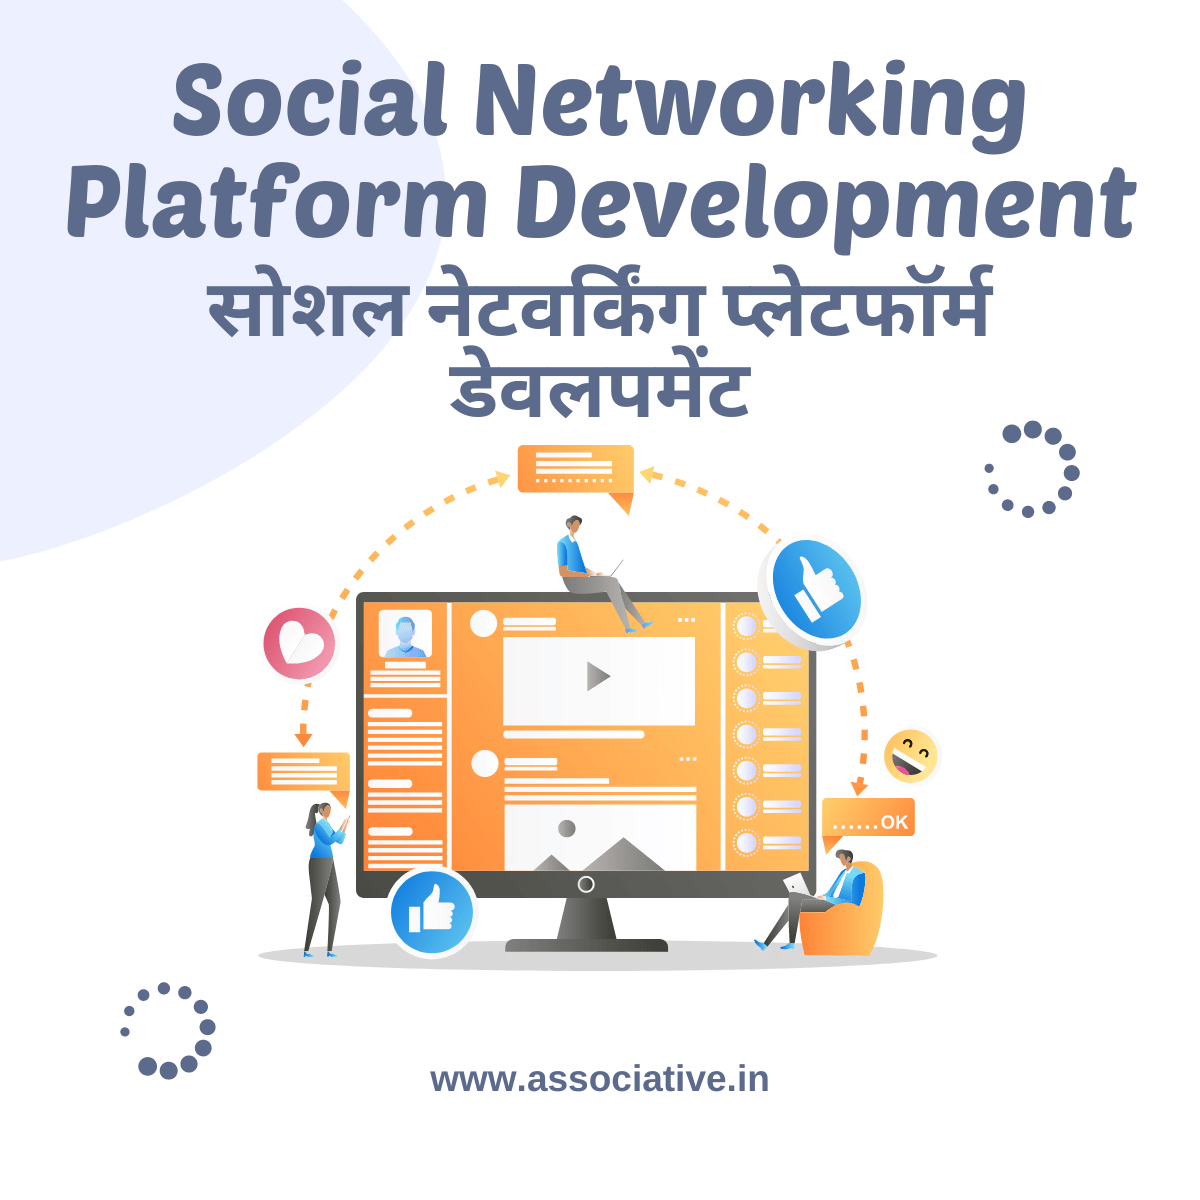 Social Networking Platform Development सोशल नेटवर्किंग प्लेटफॉर्म डेवलपमेंट